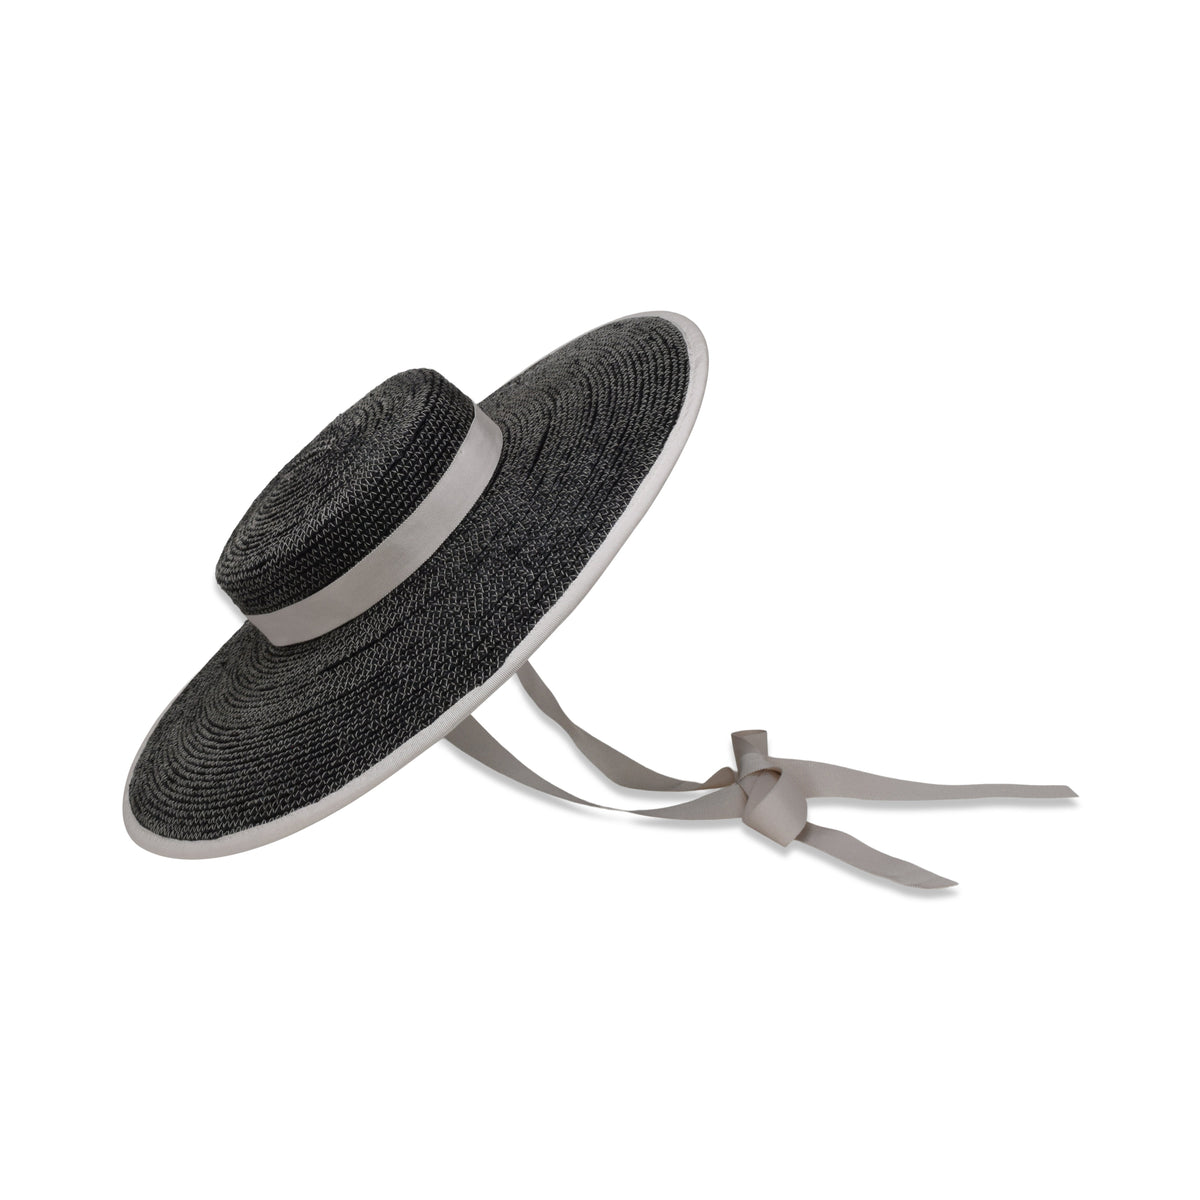 Claiborne Hat in Black & Ivory